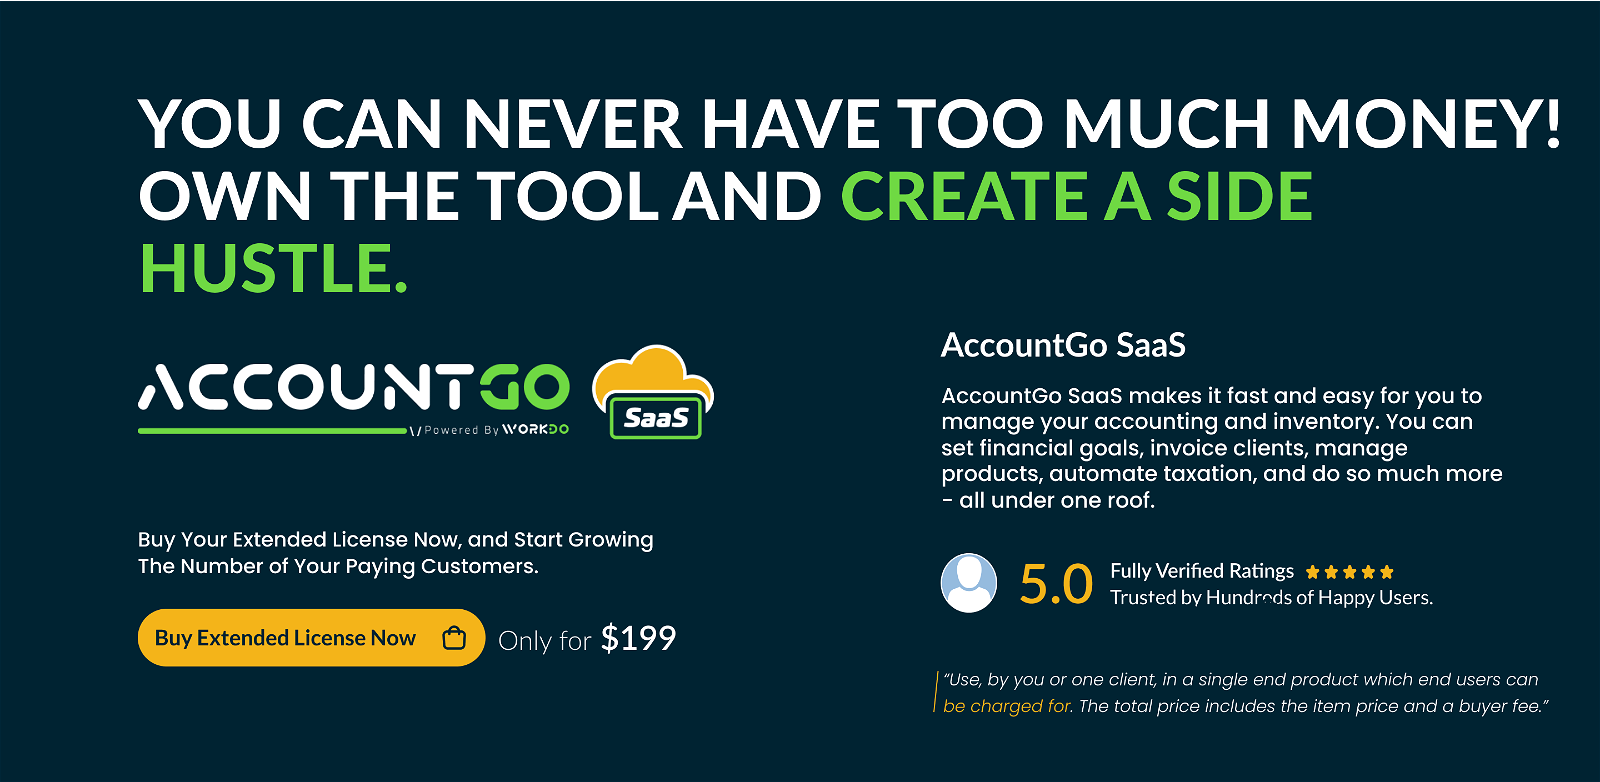 AccountGo SaaS - Accounting and Billing Tool - 6